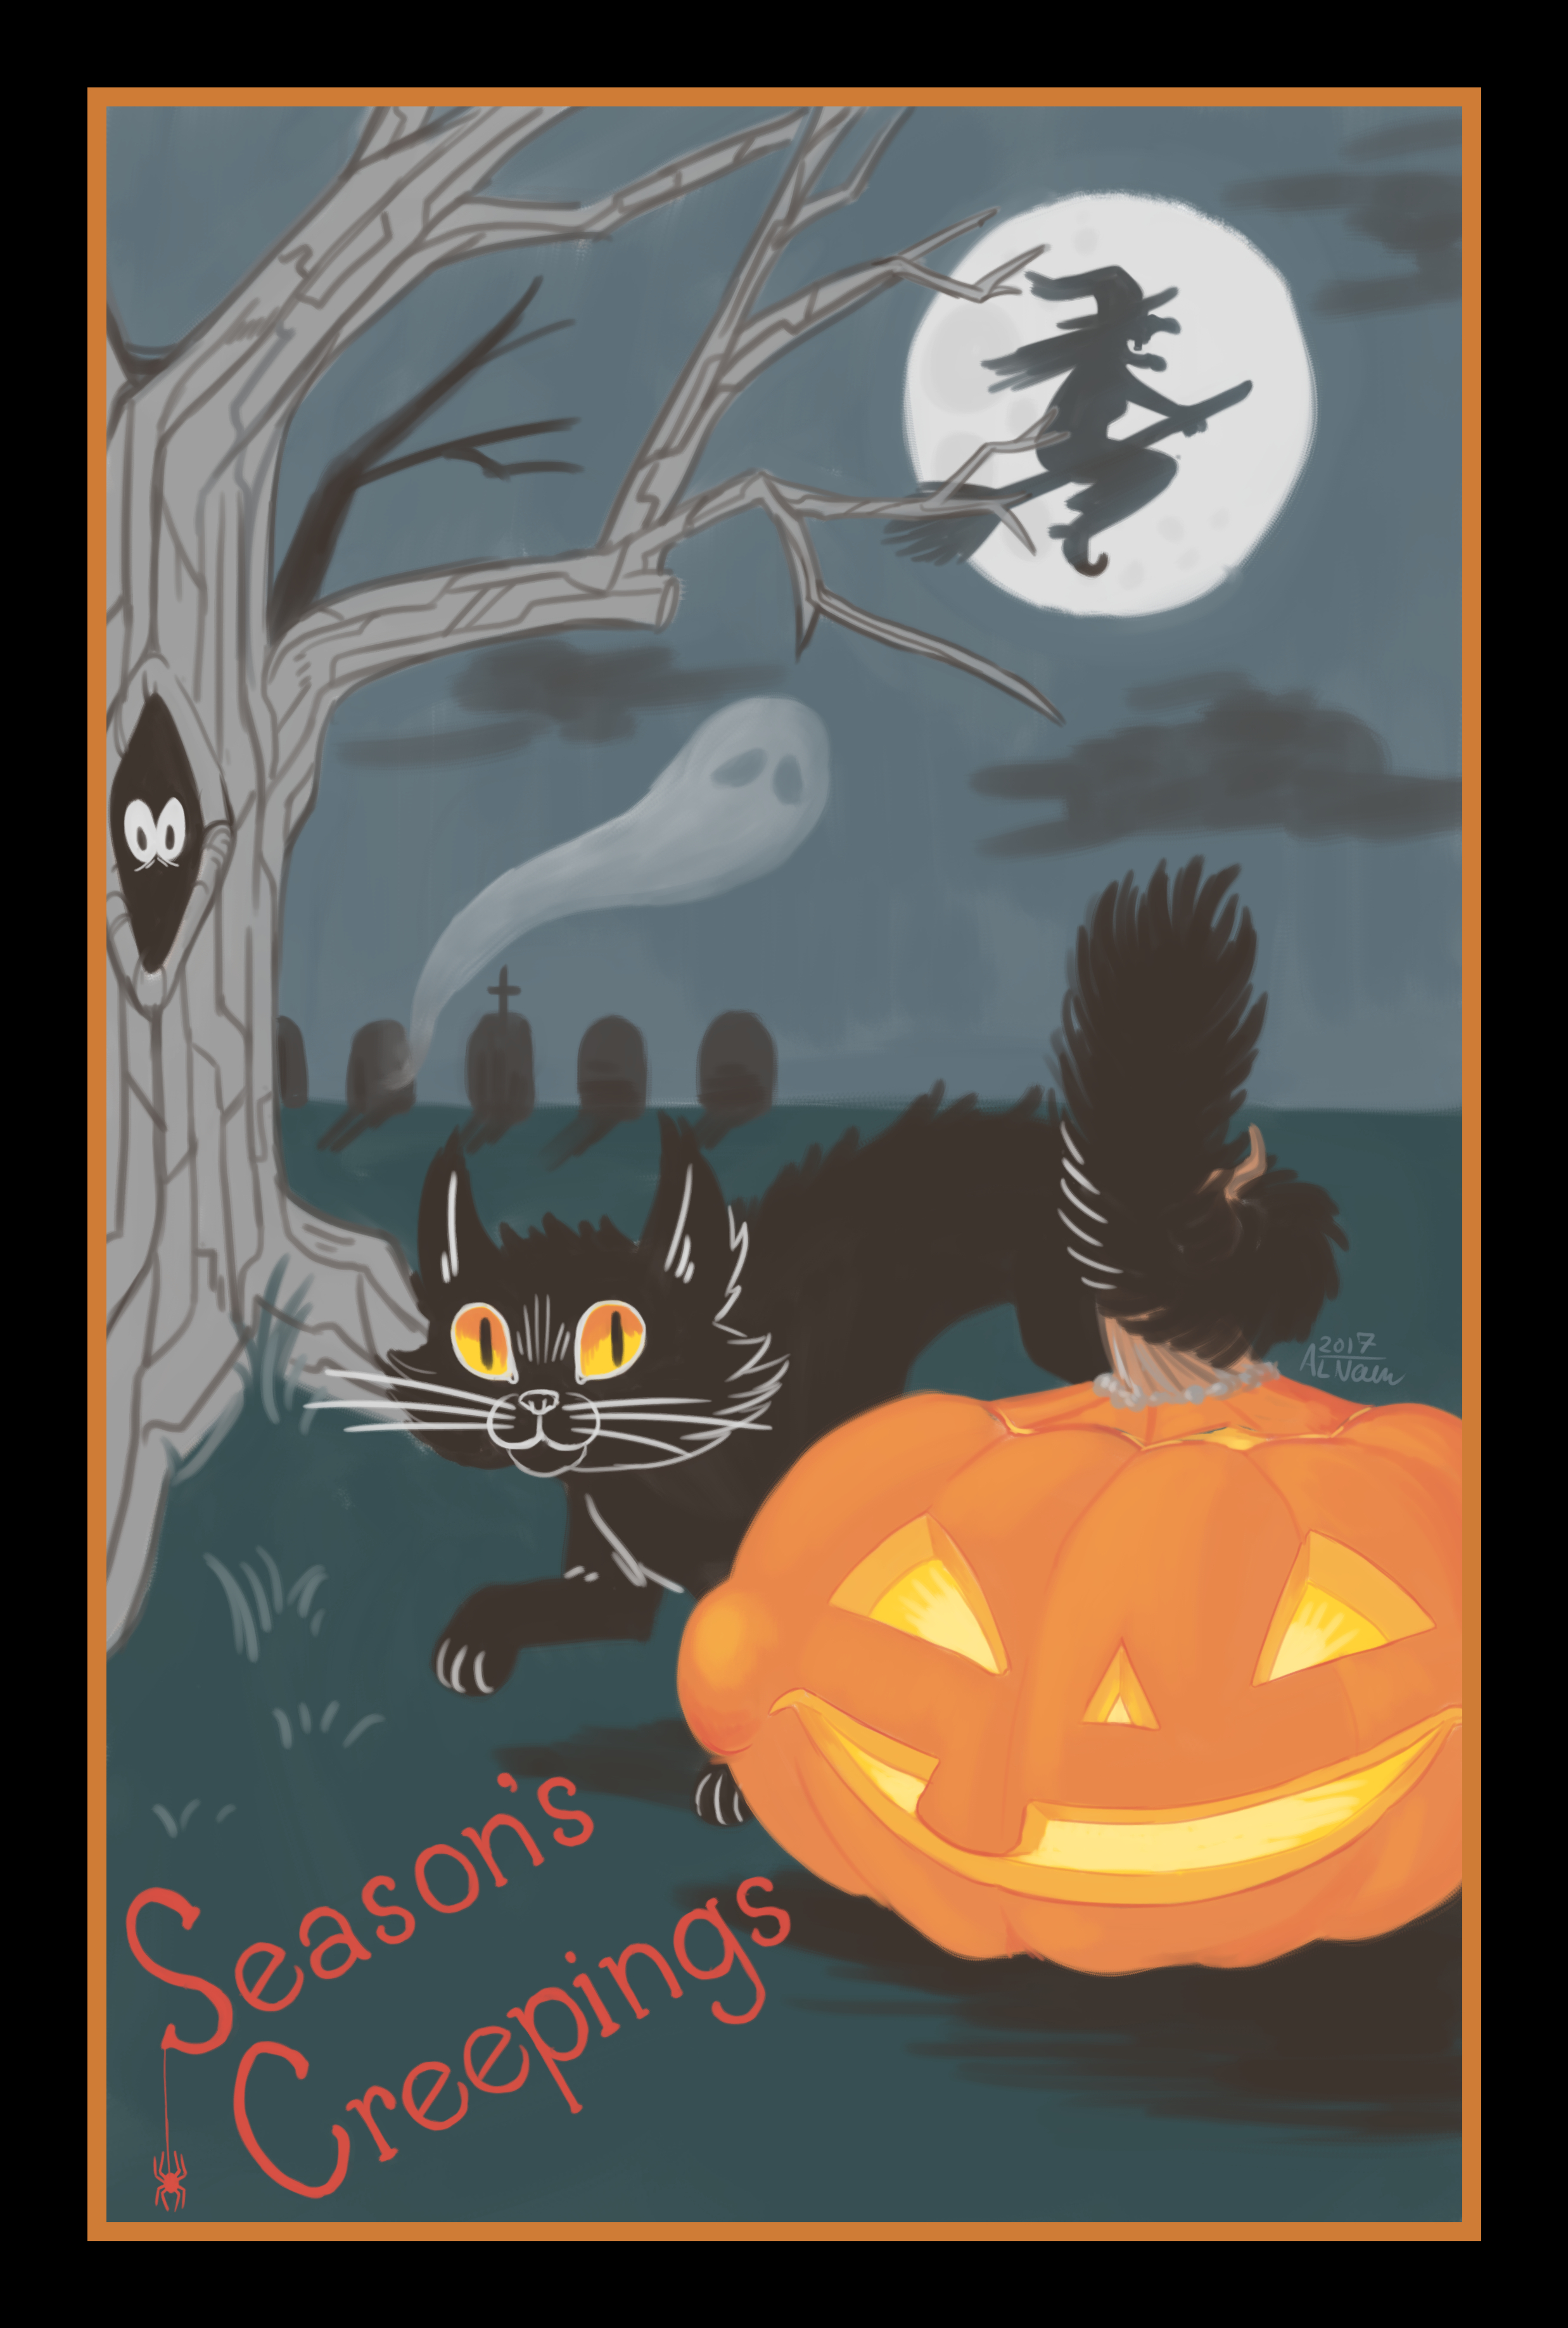  “Season’s Creepings”  Halloween Postcard, digital 2017 